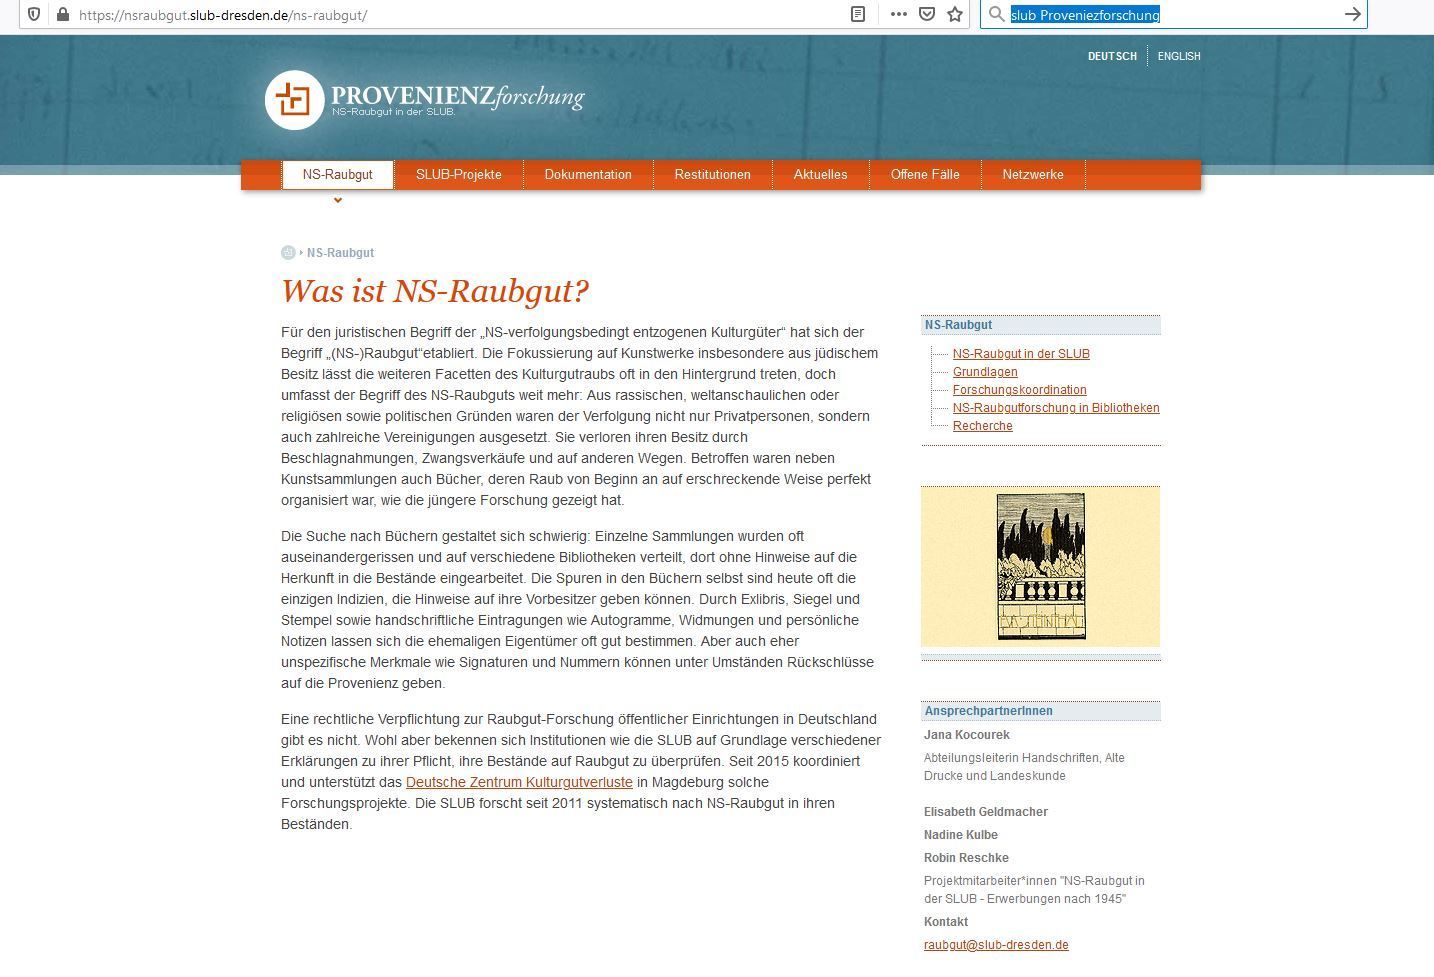 Sceenshot_website_Provenienzforschung-SLUB.JPG